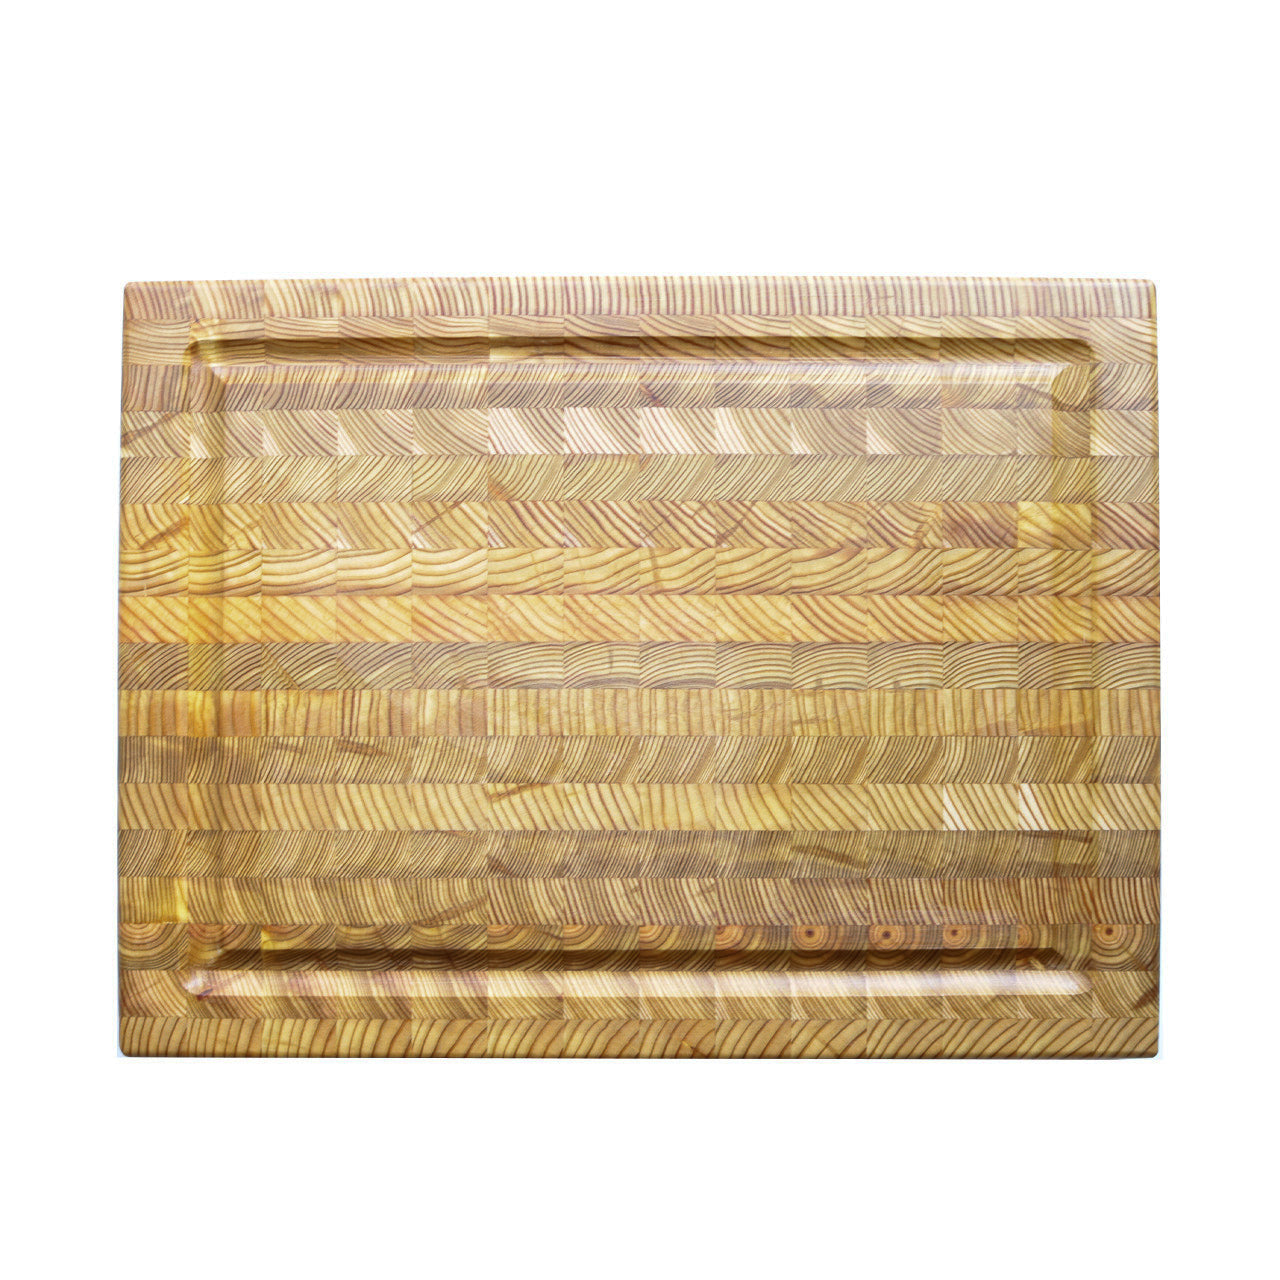 Larchwood Carving Board (Standard)